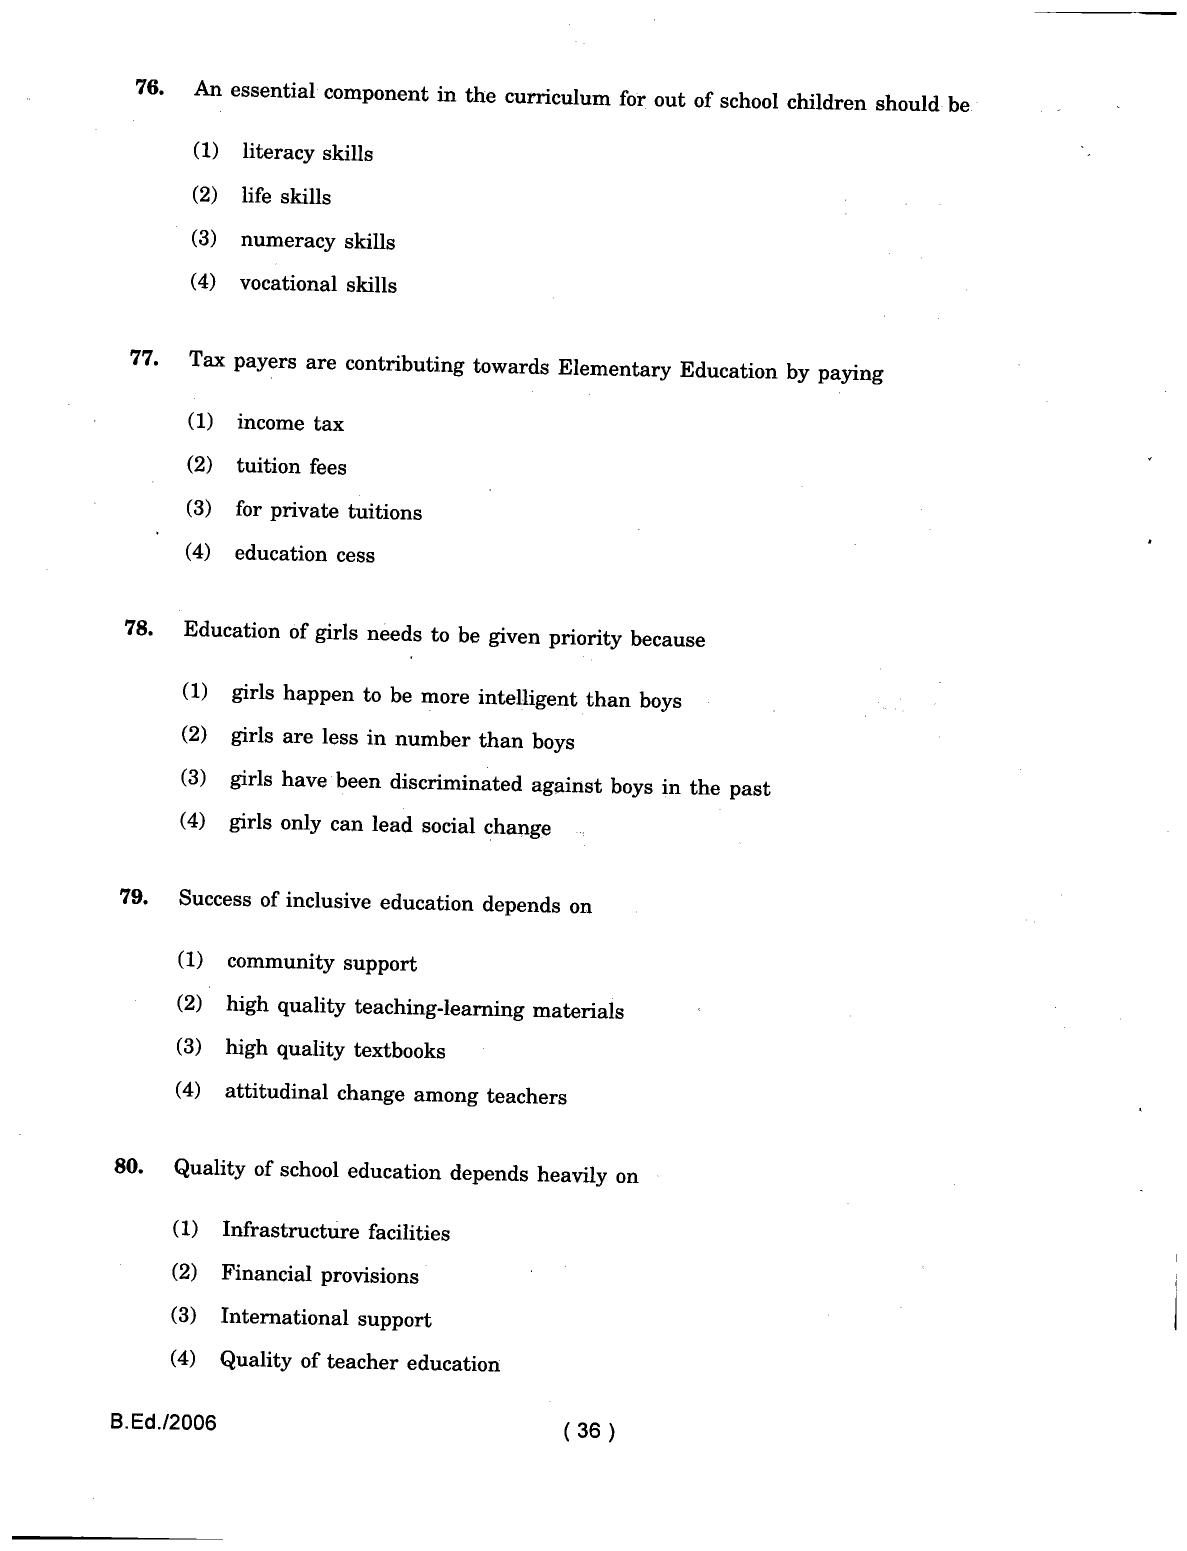 IGNOU B.Ed 2006 Question Paper - Page 36